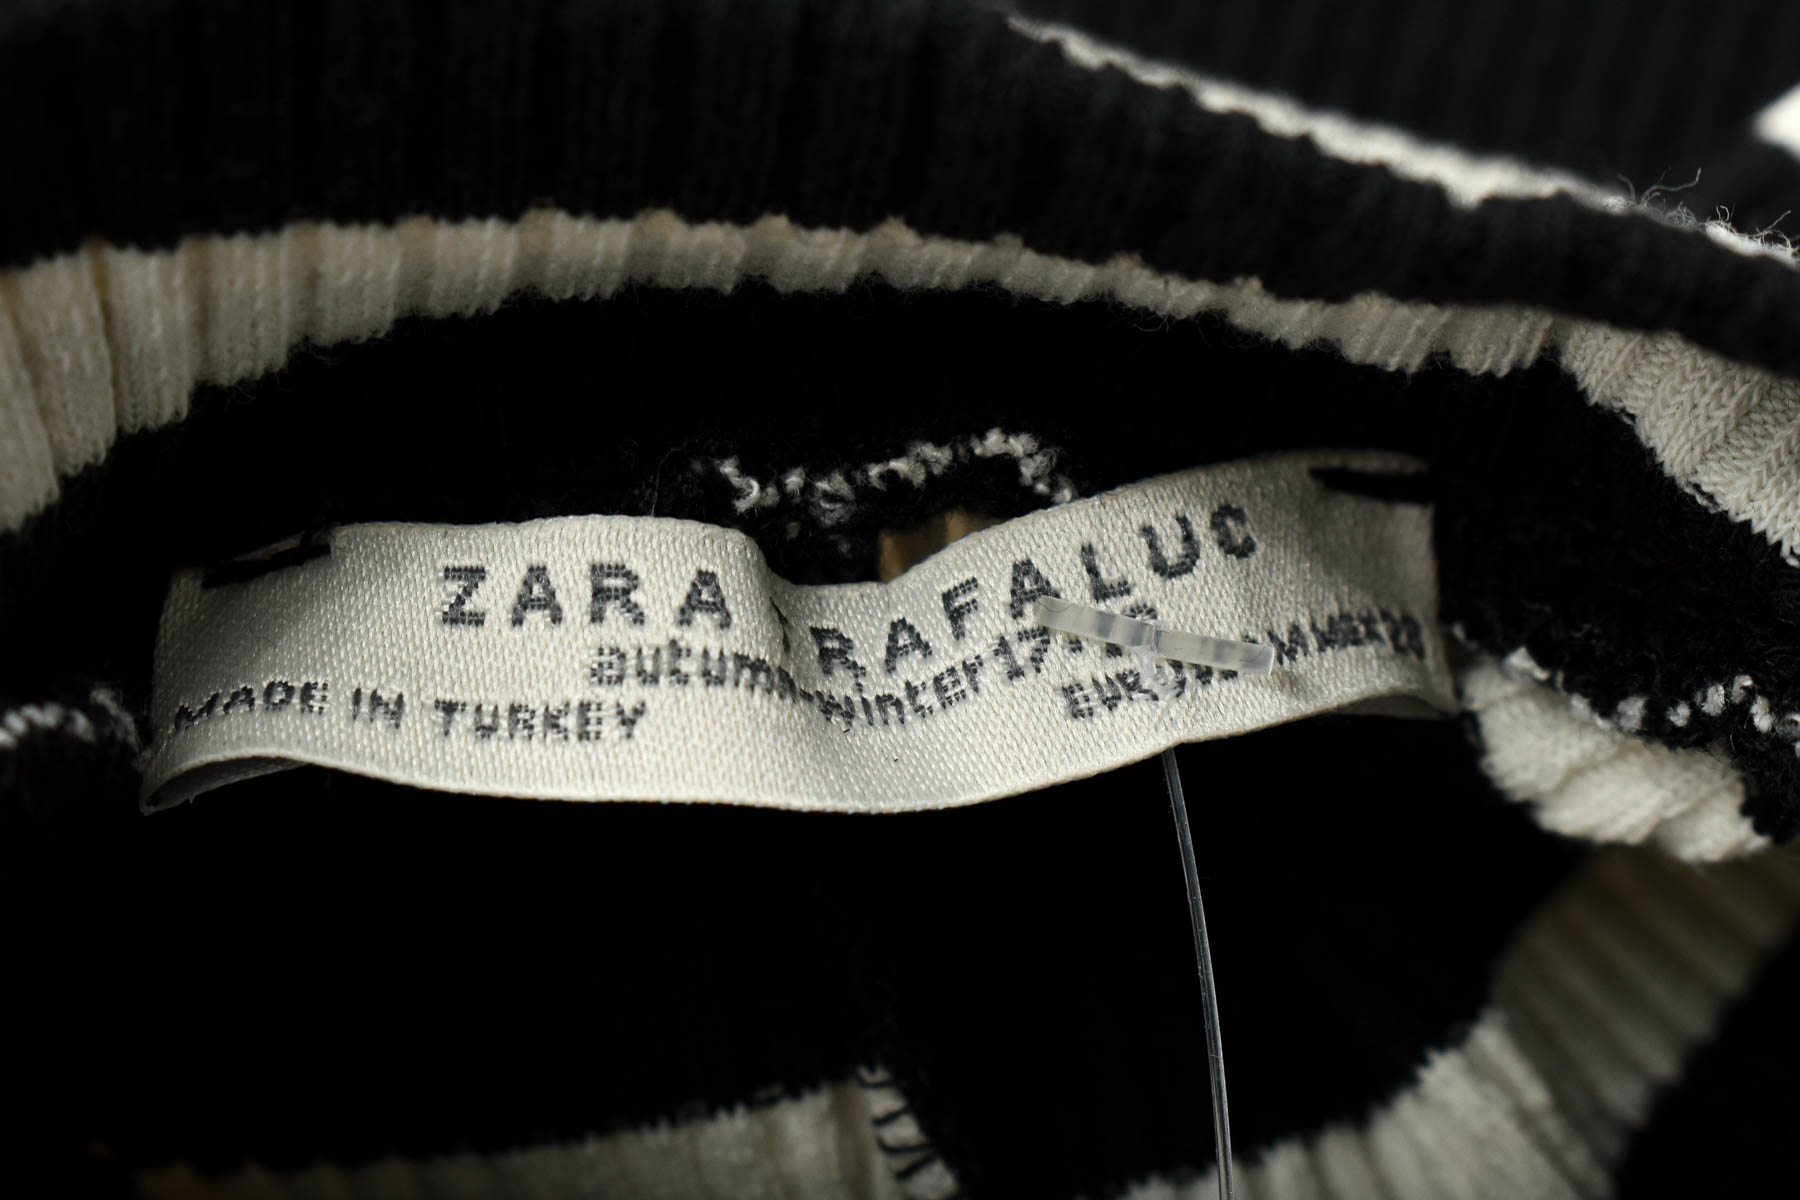 Women's sweater - ZARA TRAFALUC - 2